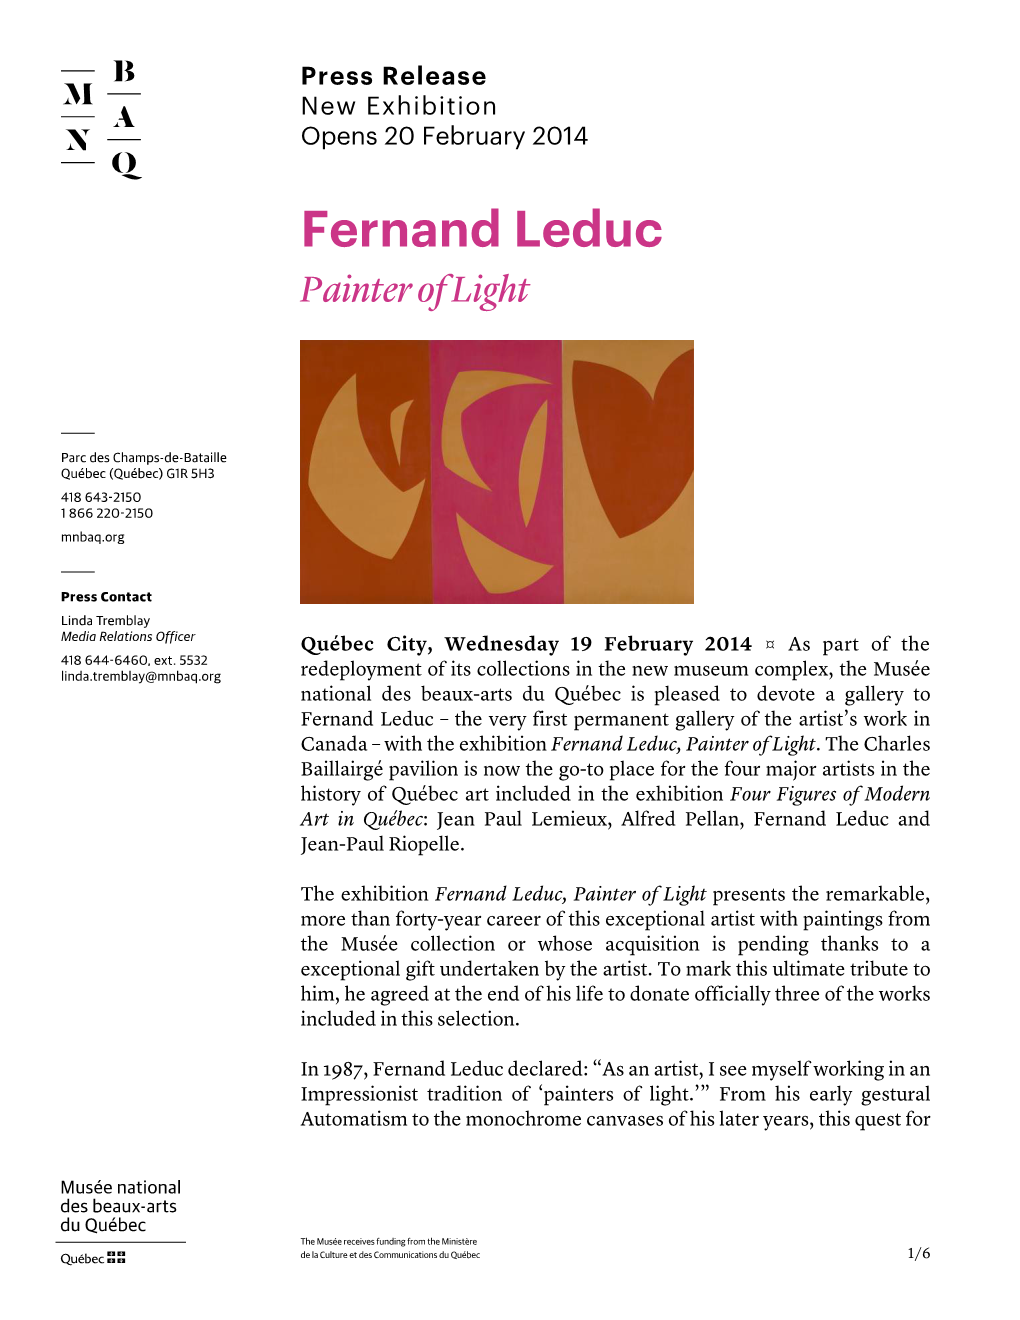 Fernand Leduc Painter of Light